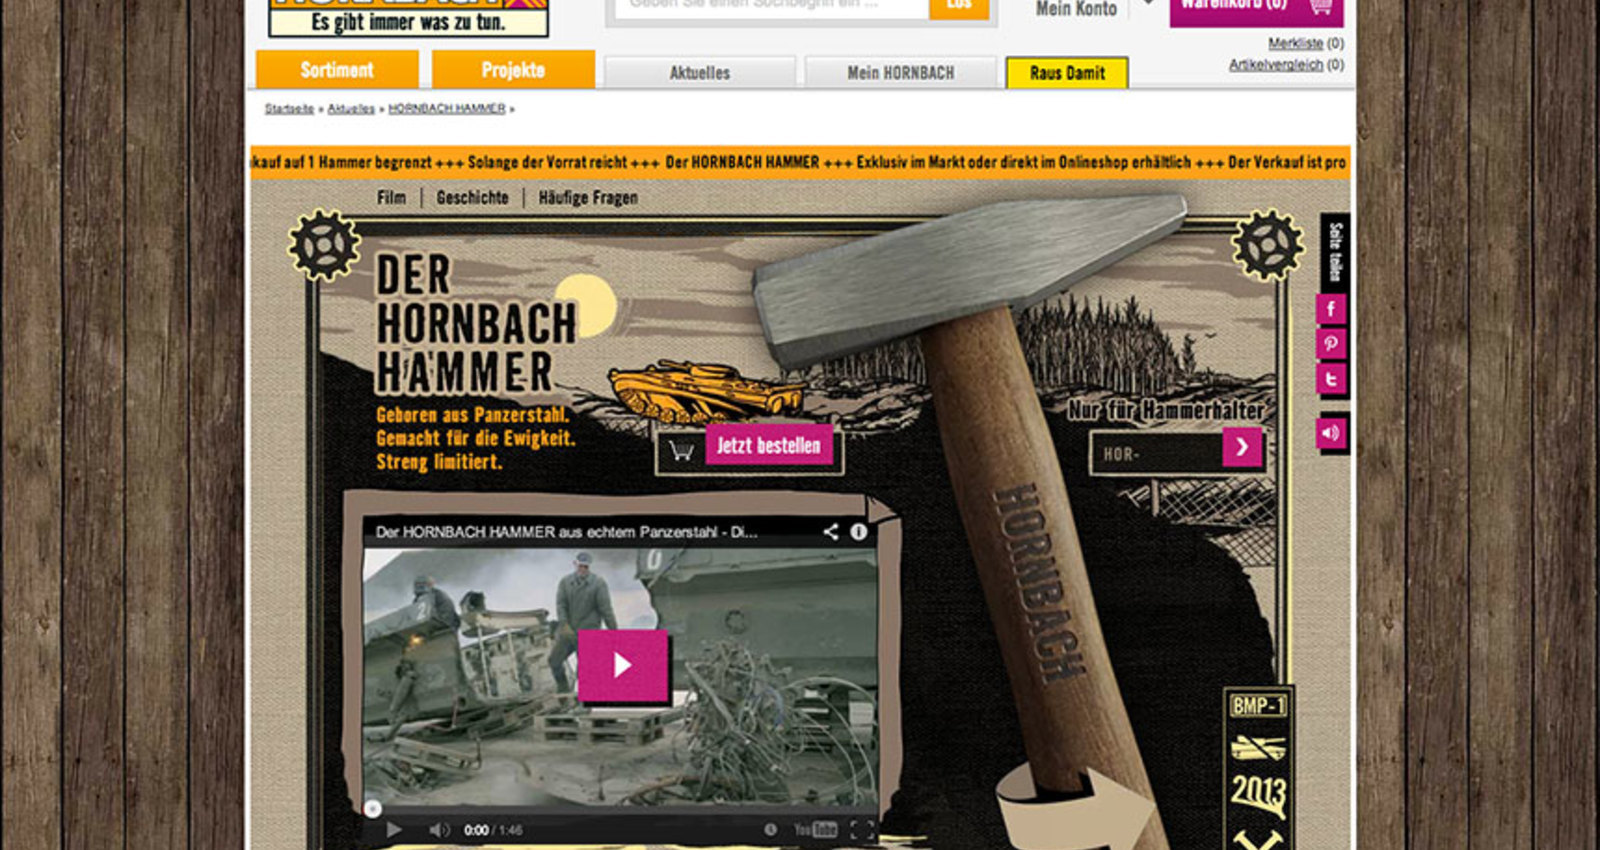 The Hornbach Hammer